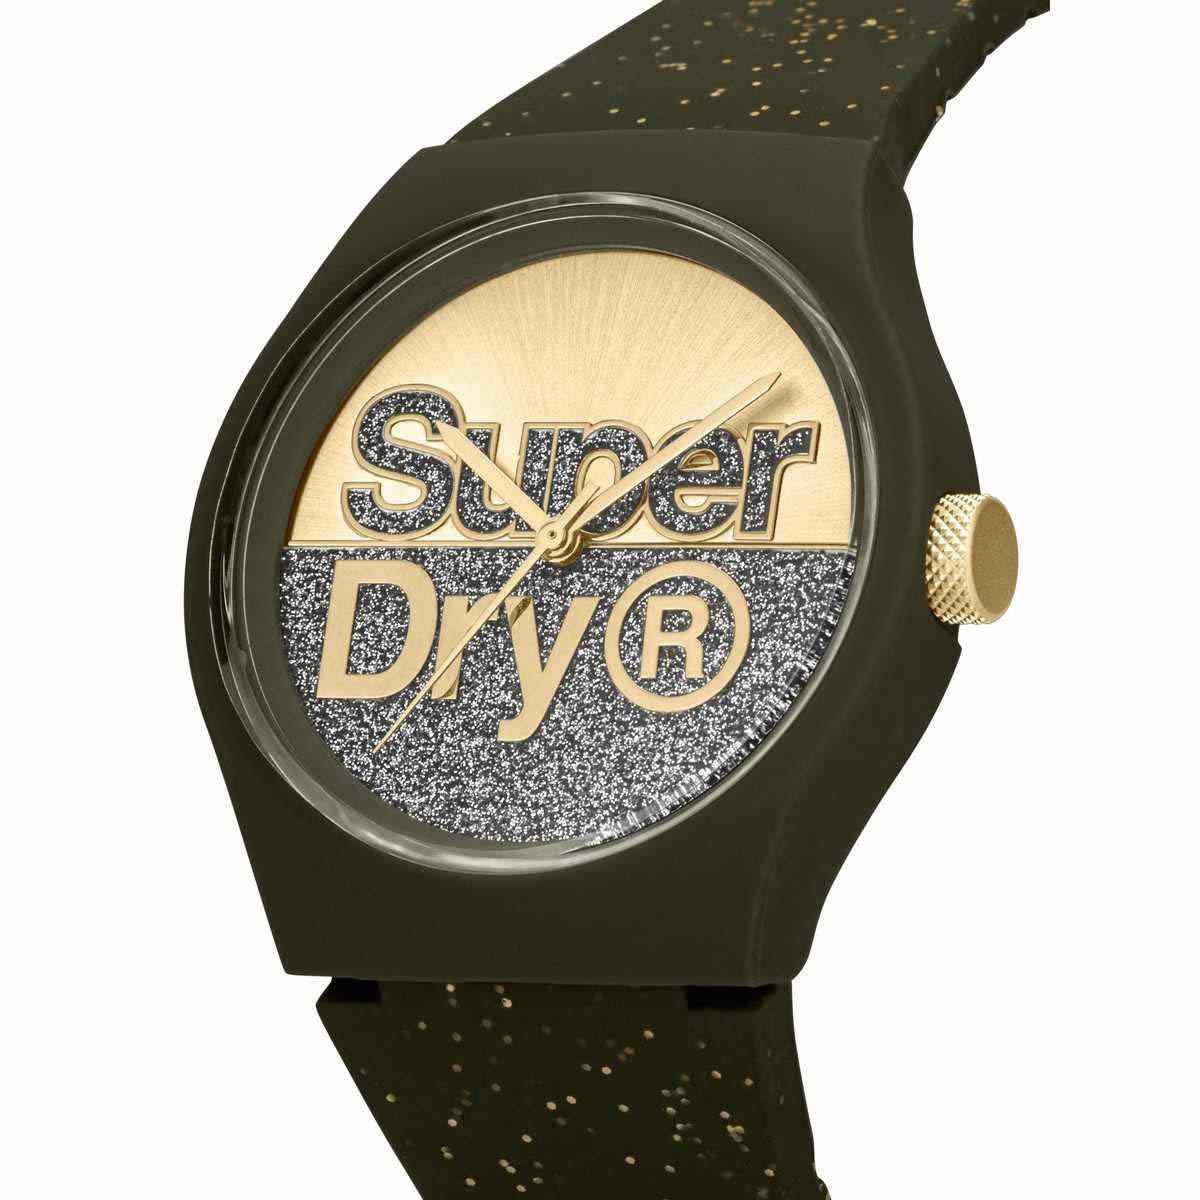 Montre femme Superdry Urban Shine - cadran doré - bracelet vert